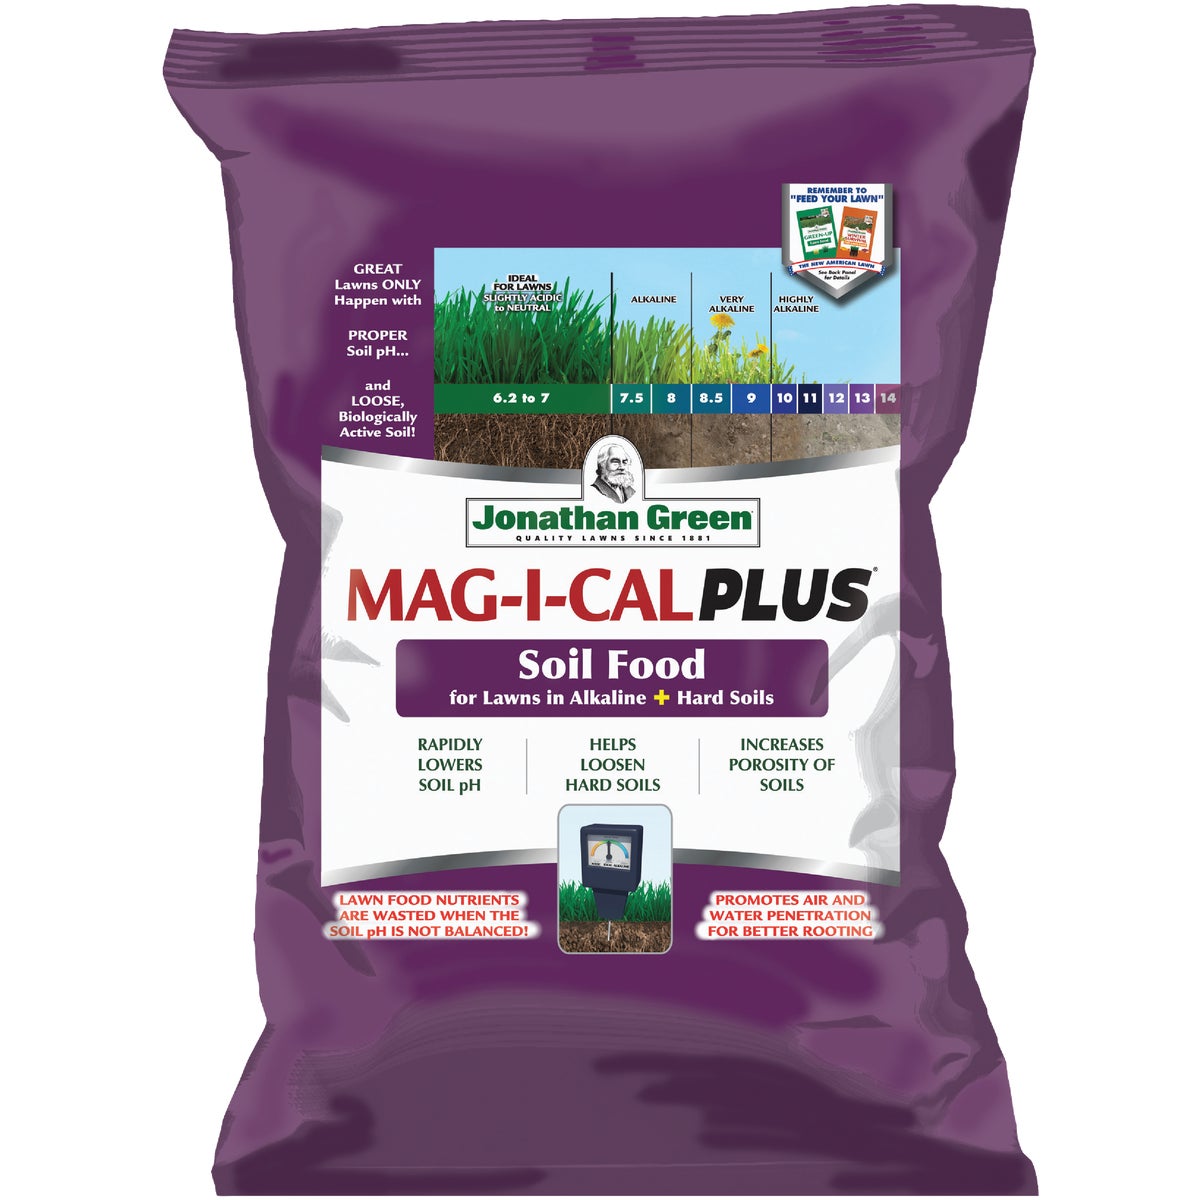 Jonathan Green MAG-I-CAL Plus 54 Lb. 15,000 Sq. Ft. 18% Calcium Lawn Fertilizer For Alkaline Soil